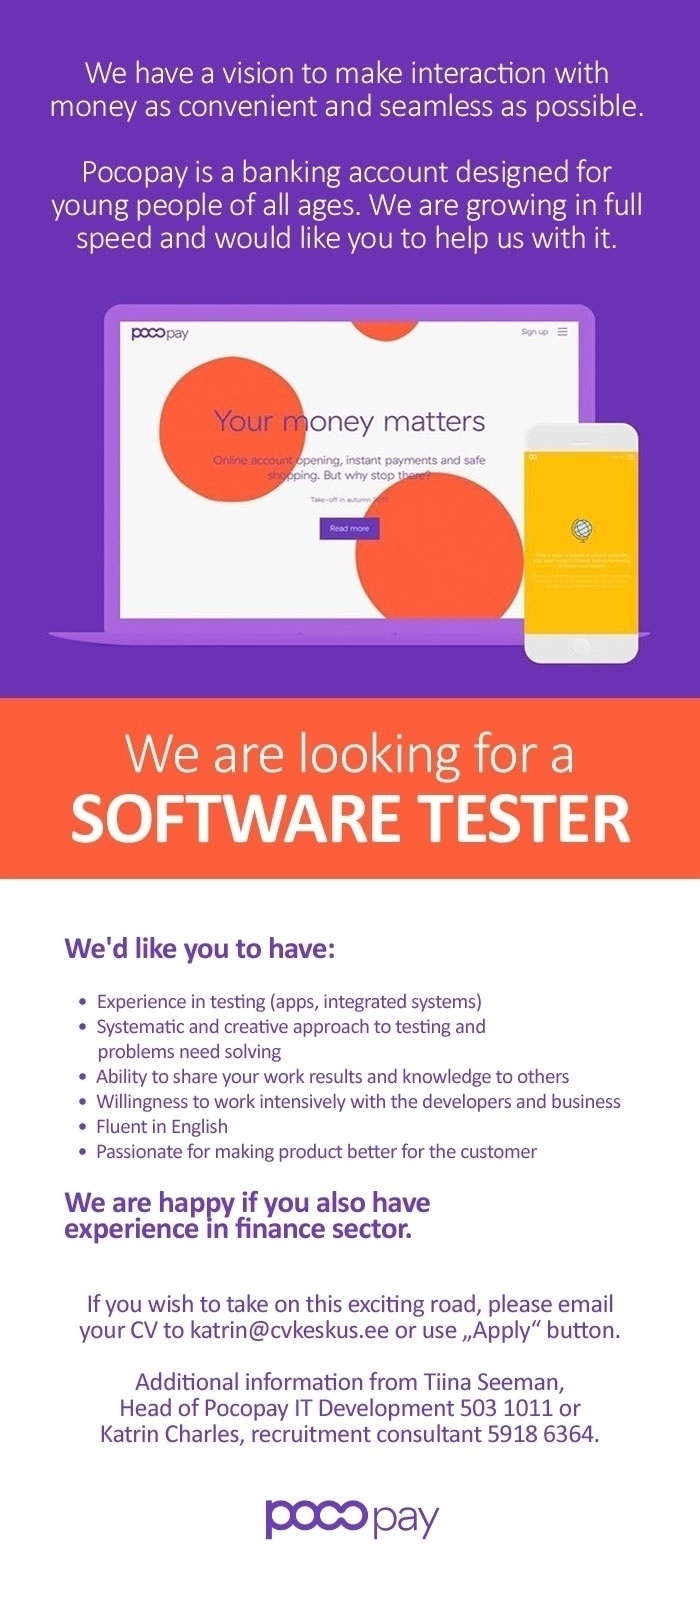 CV KESKUS OÜ Pocopay is looking for a Software Tester!